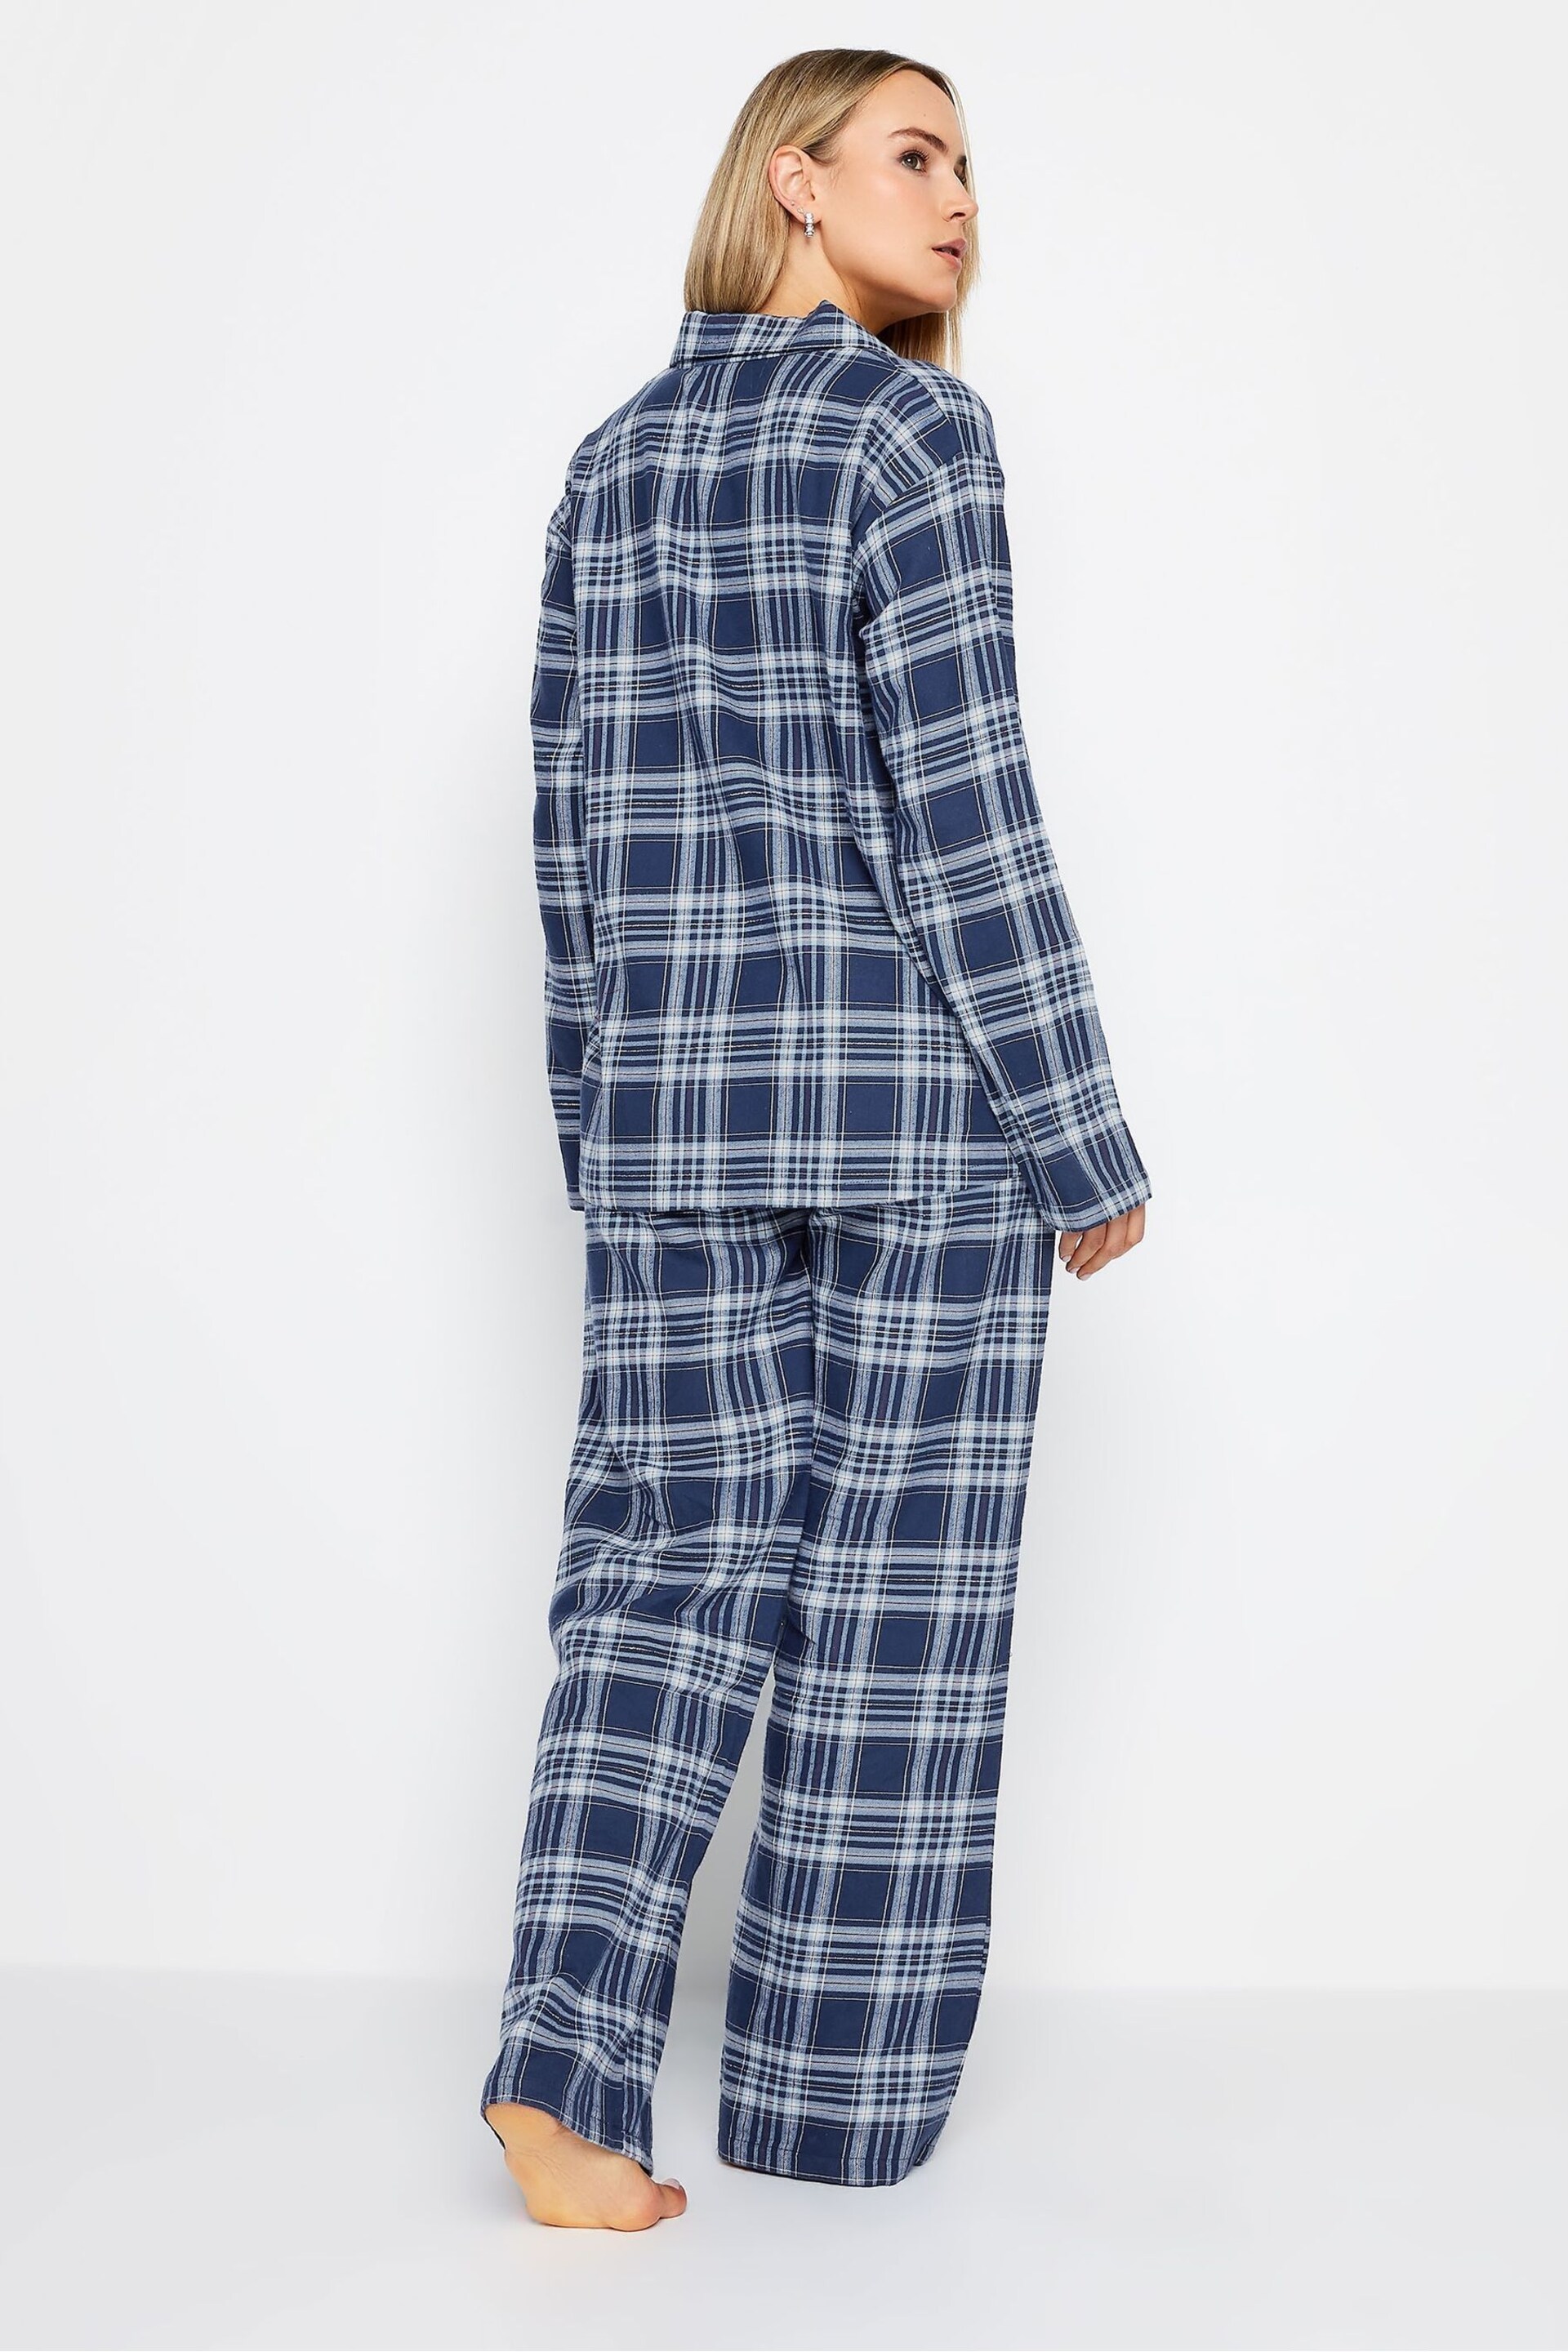 Long Tall Sally Blue Twill Check Pyjama Set - Image 3 of 5